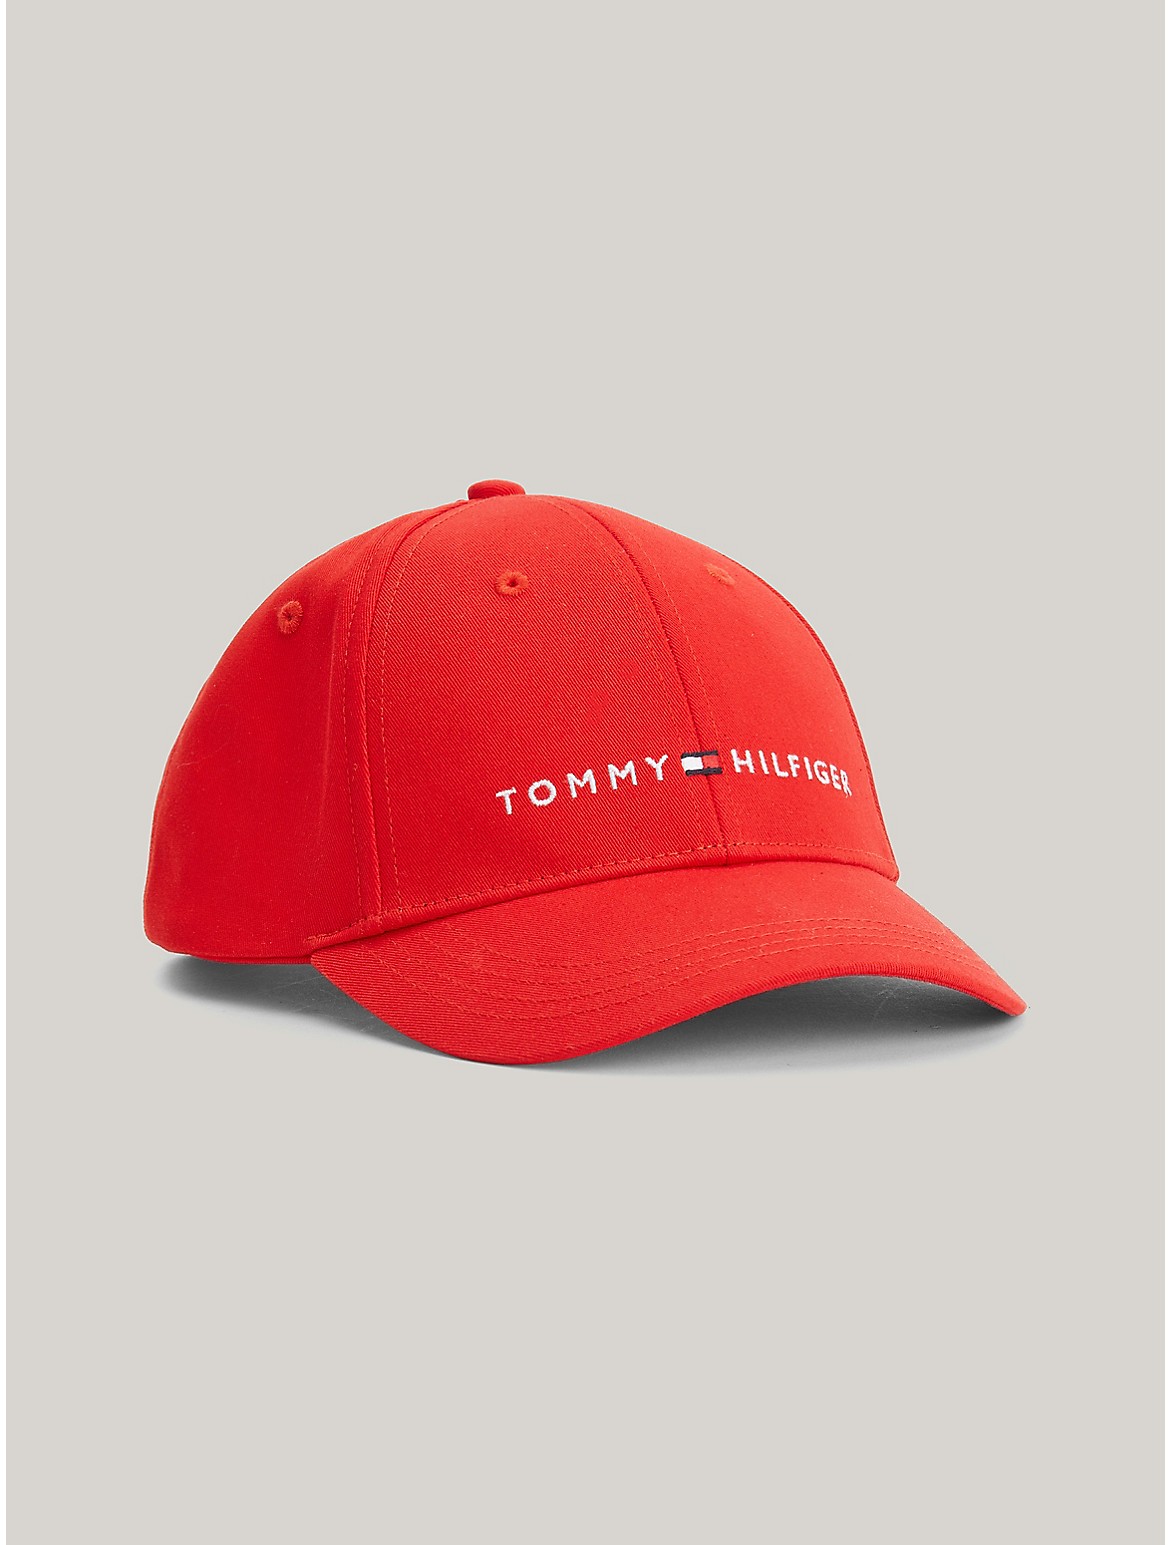 Tommy Hilfiger Kids' Tommy Logo Baseball Hat - Red - S-M